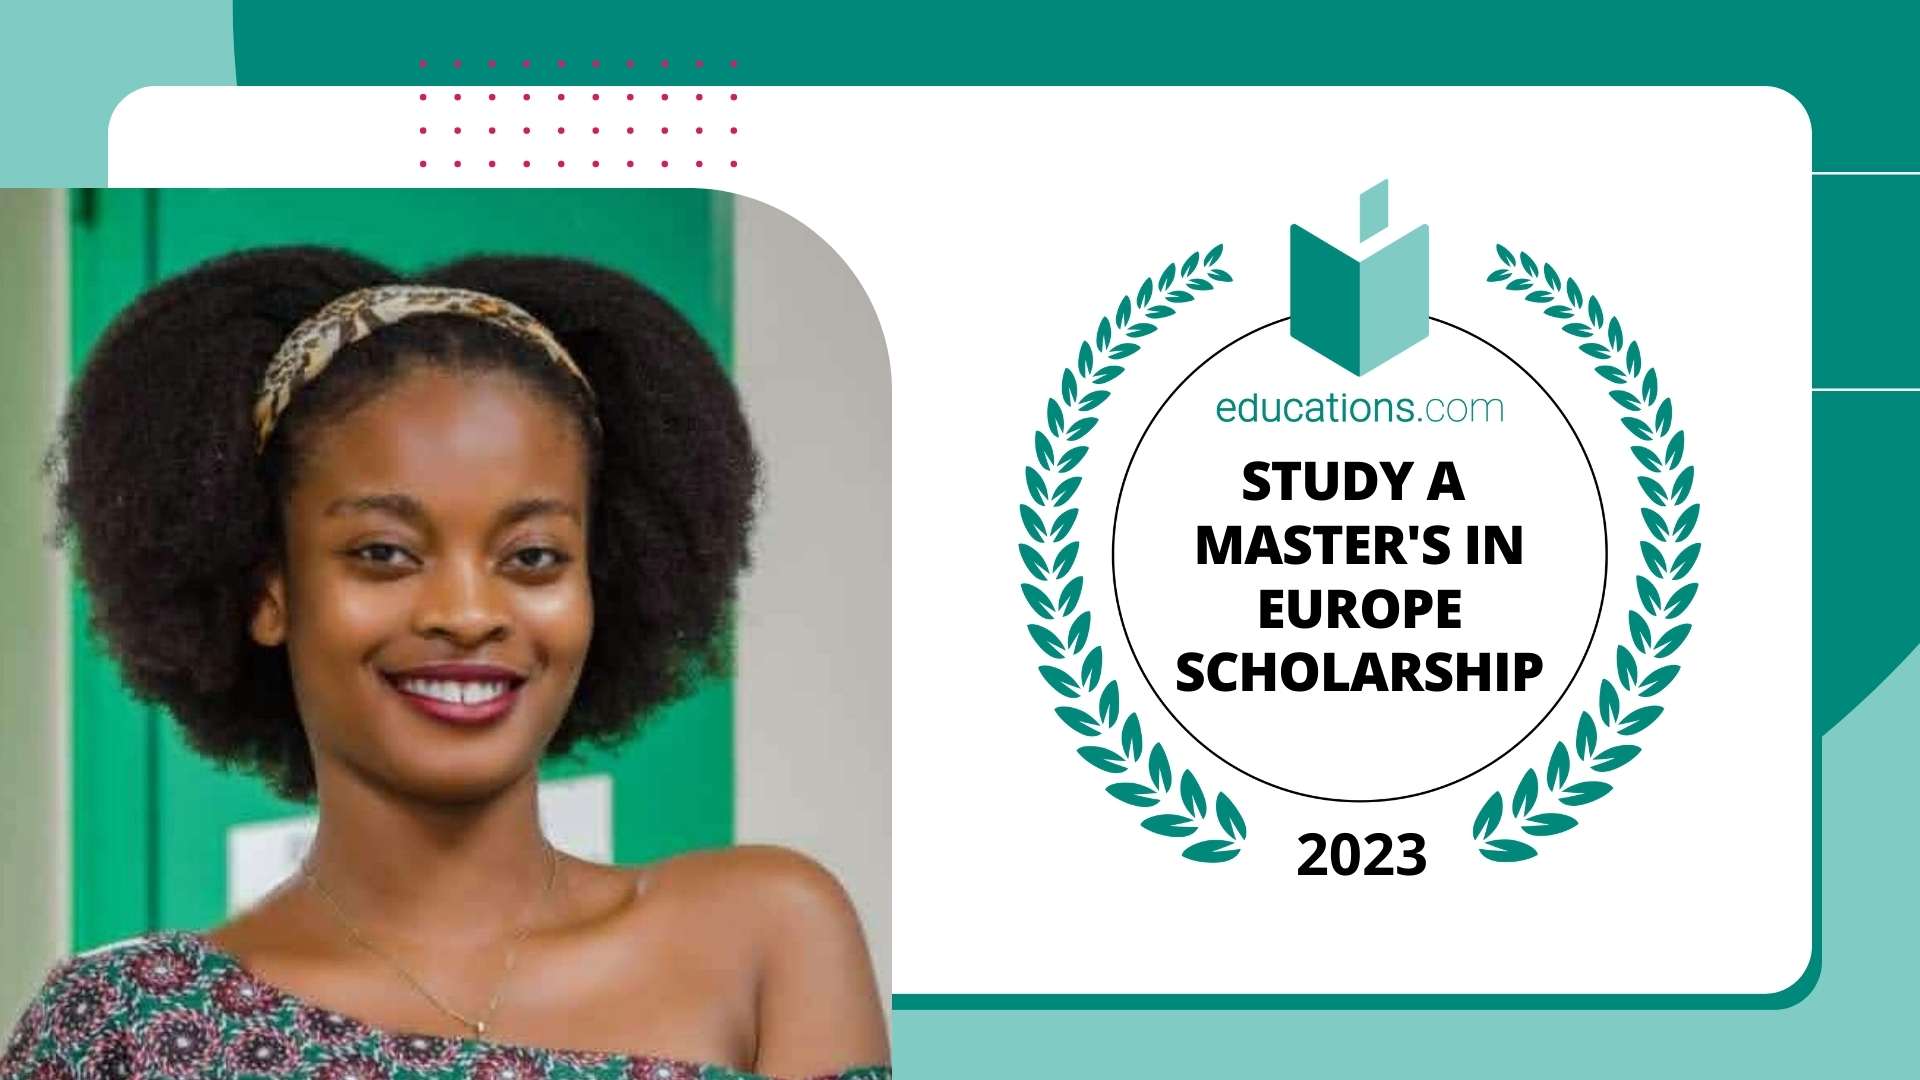 Winner of the Study a Master's in Europe Scholarship 2023 - Rhoda Boadu